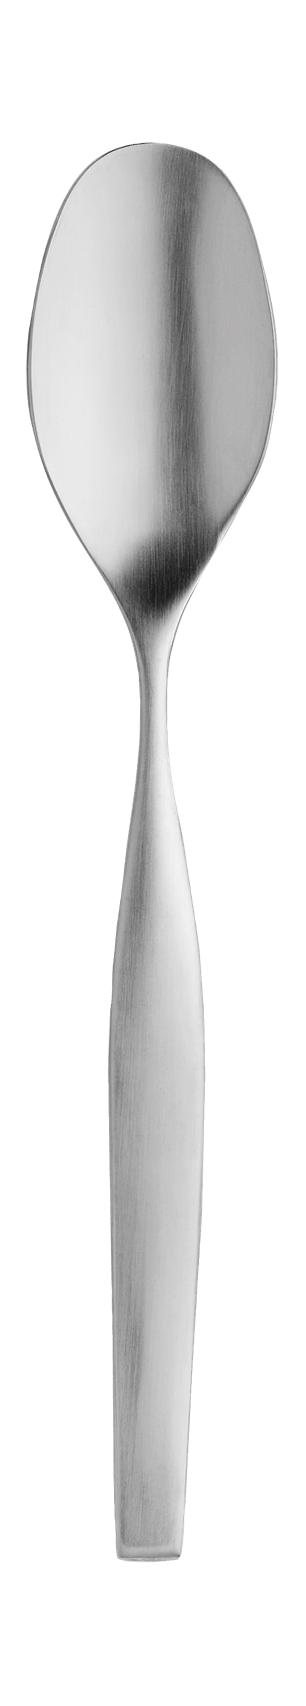 Stelton Capelano Table Spoon